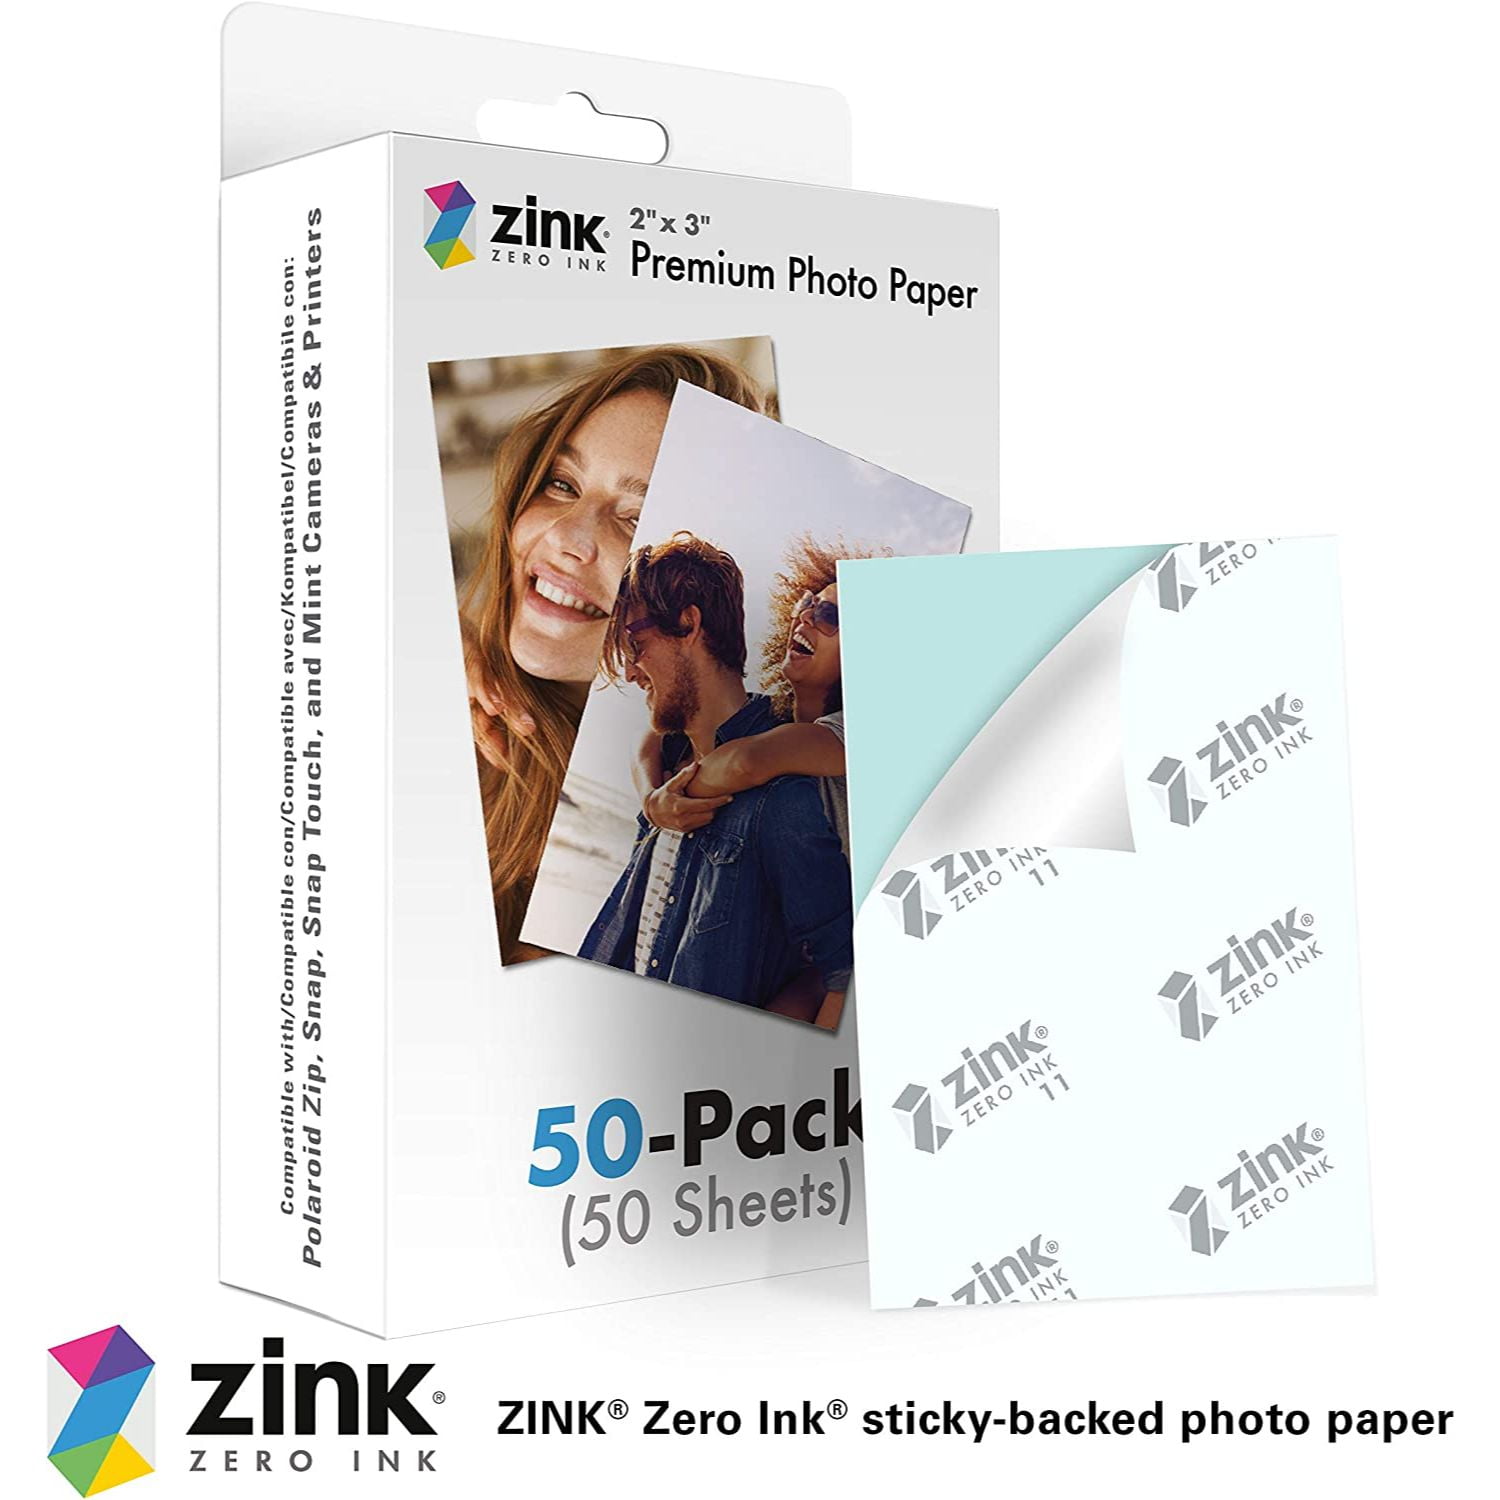 Kodak Zink Photo Paper 50 Sheets 2x3 Inch for sale online